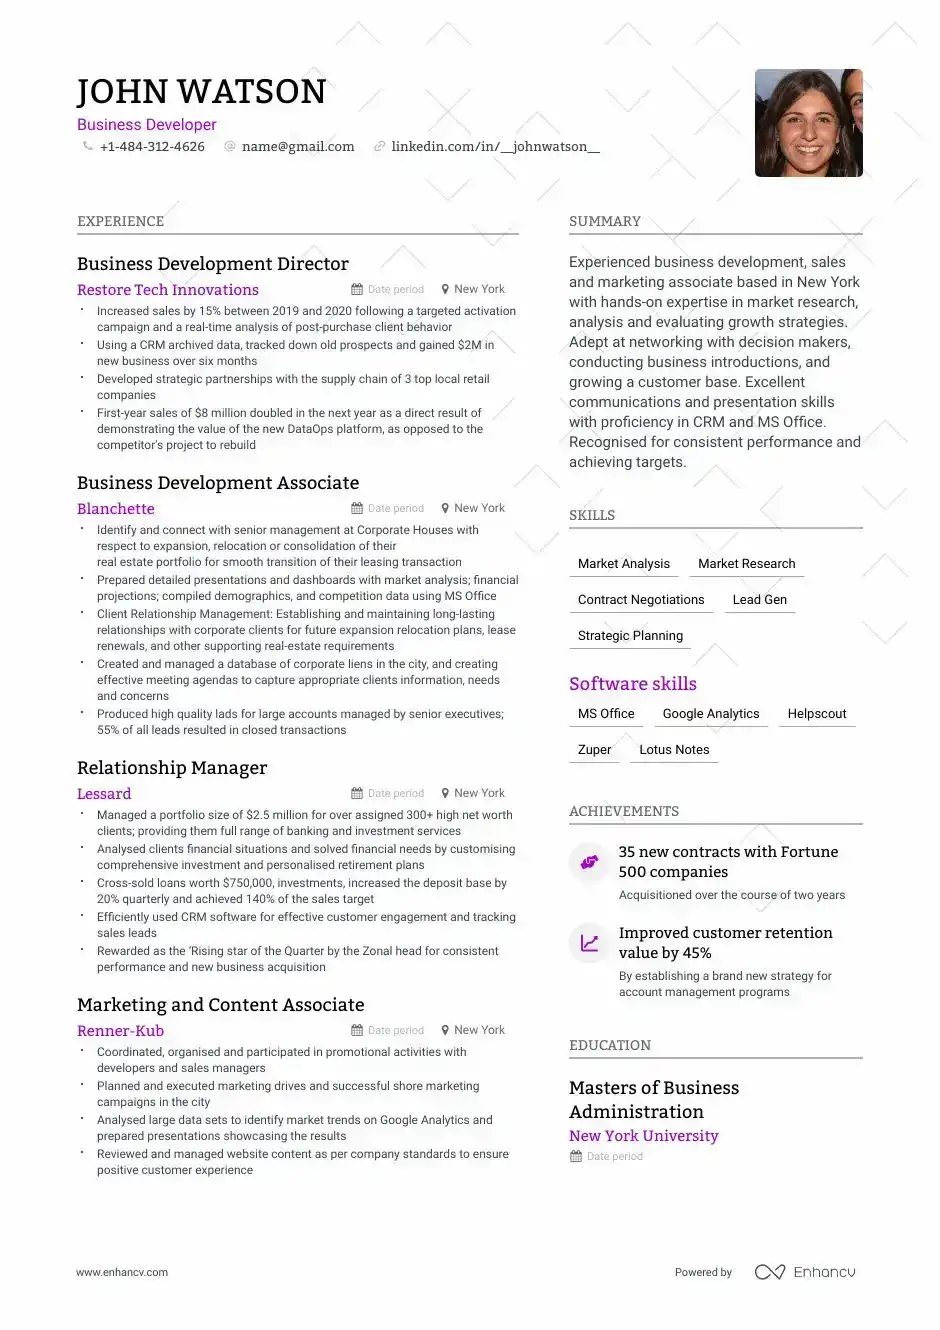 Business Development resume